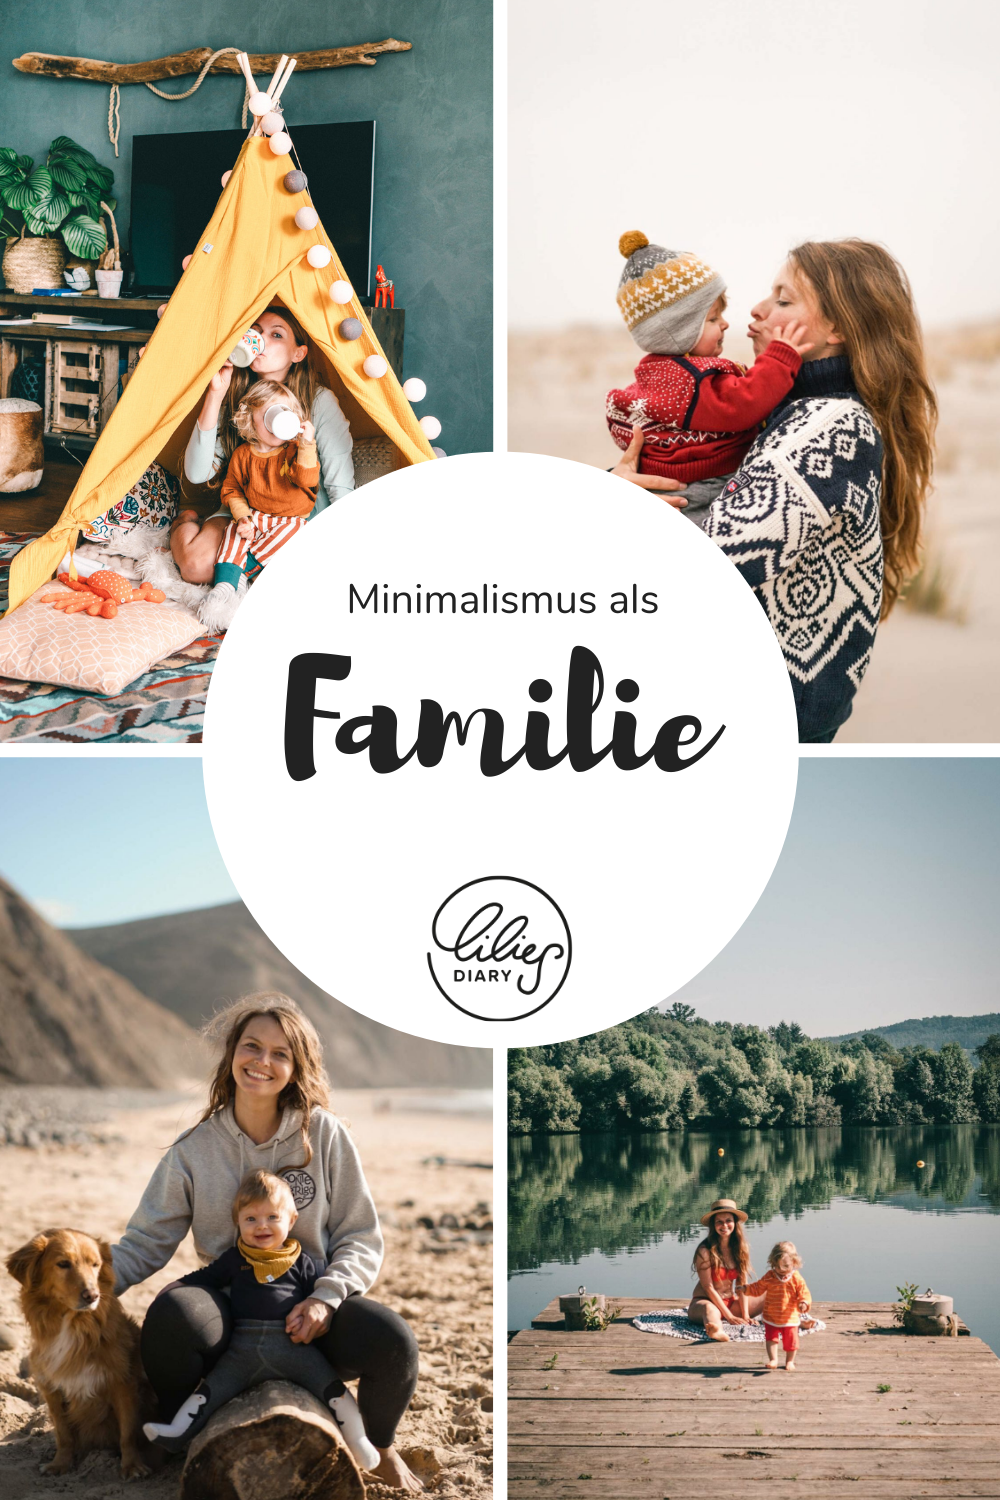 Minimalismus als Familie